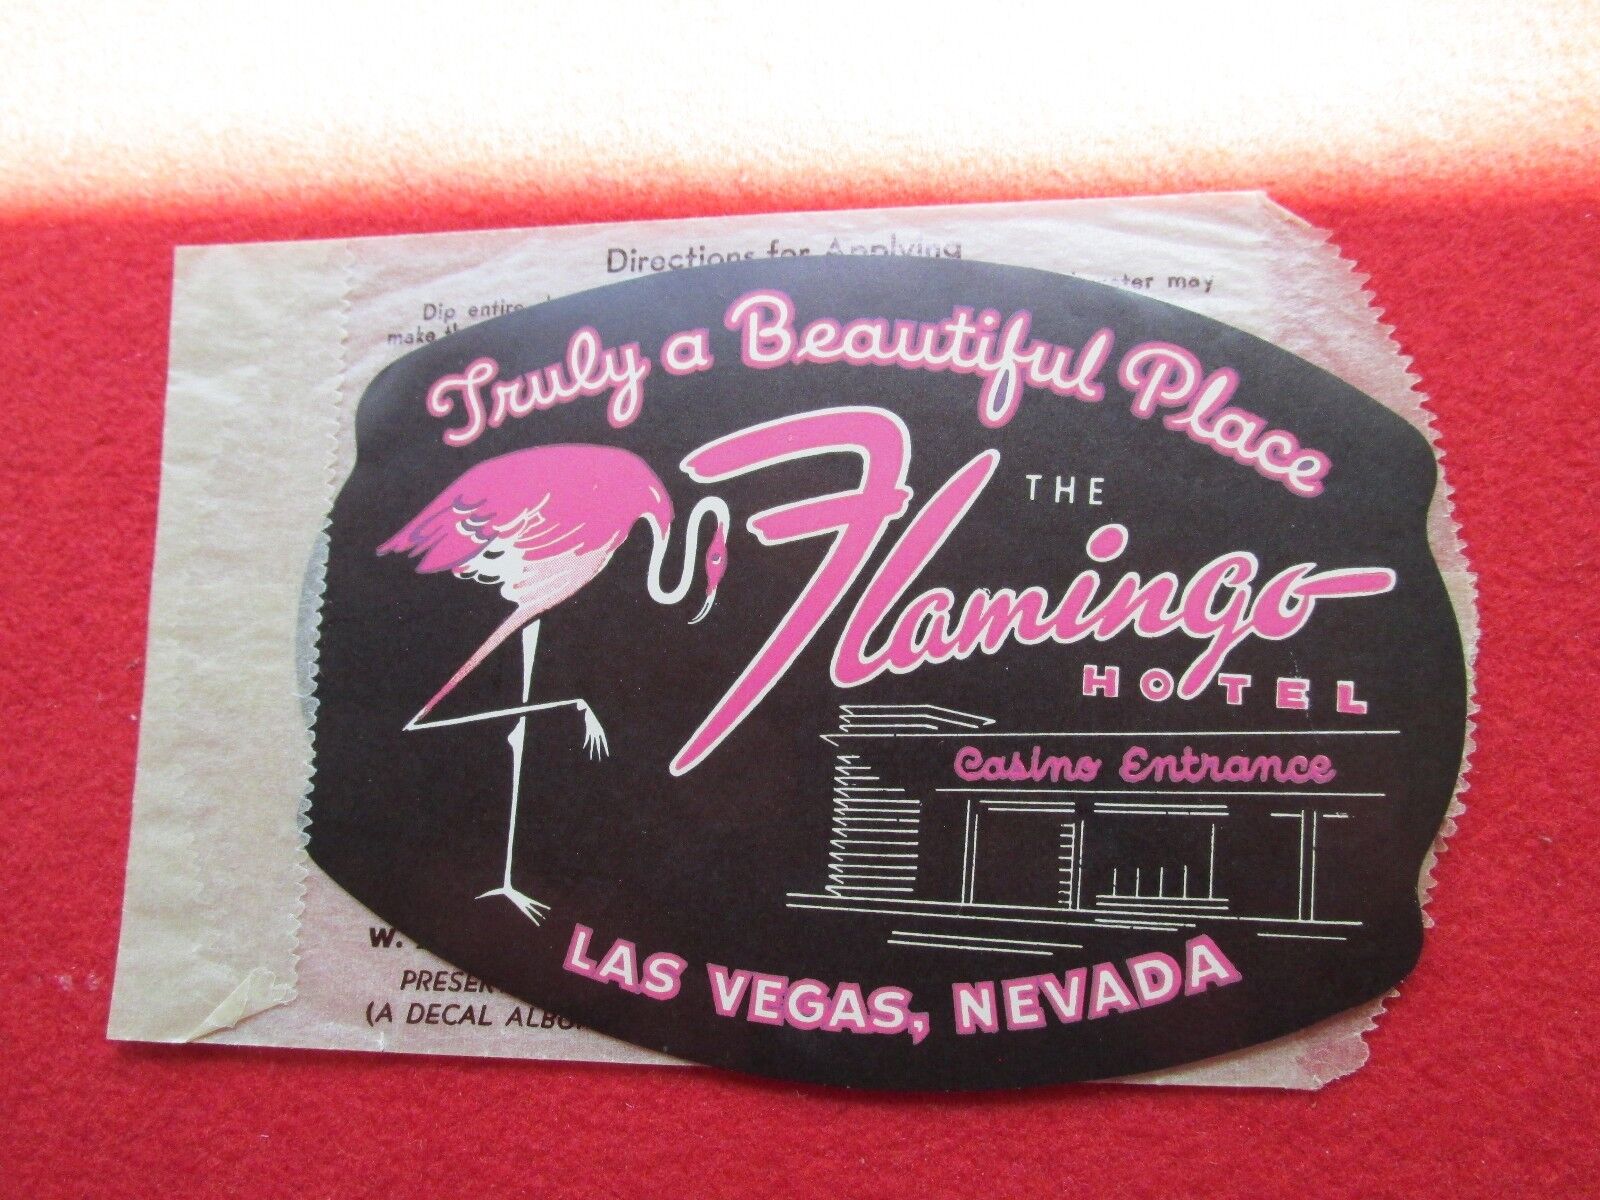 Flamingo Hotel Casino Gambling Luggage tag Sticker Las Vegas Nevada unused